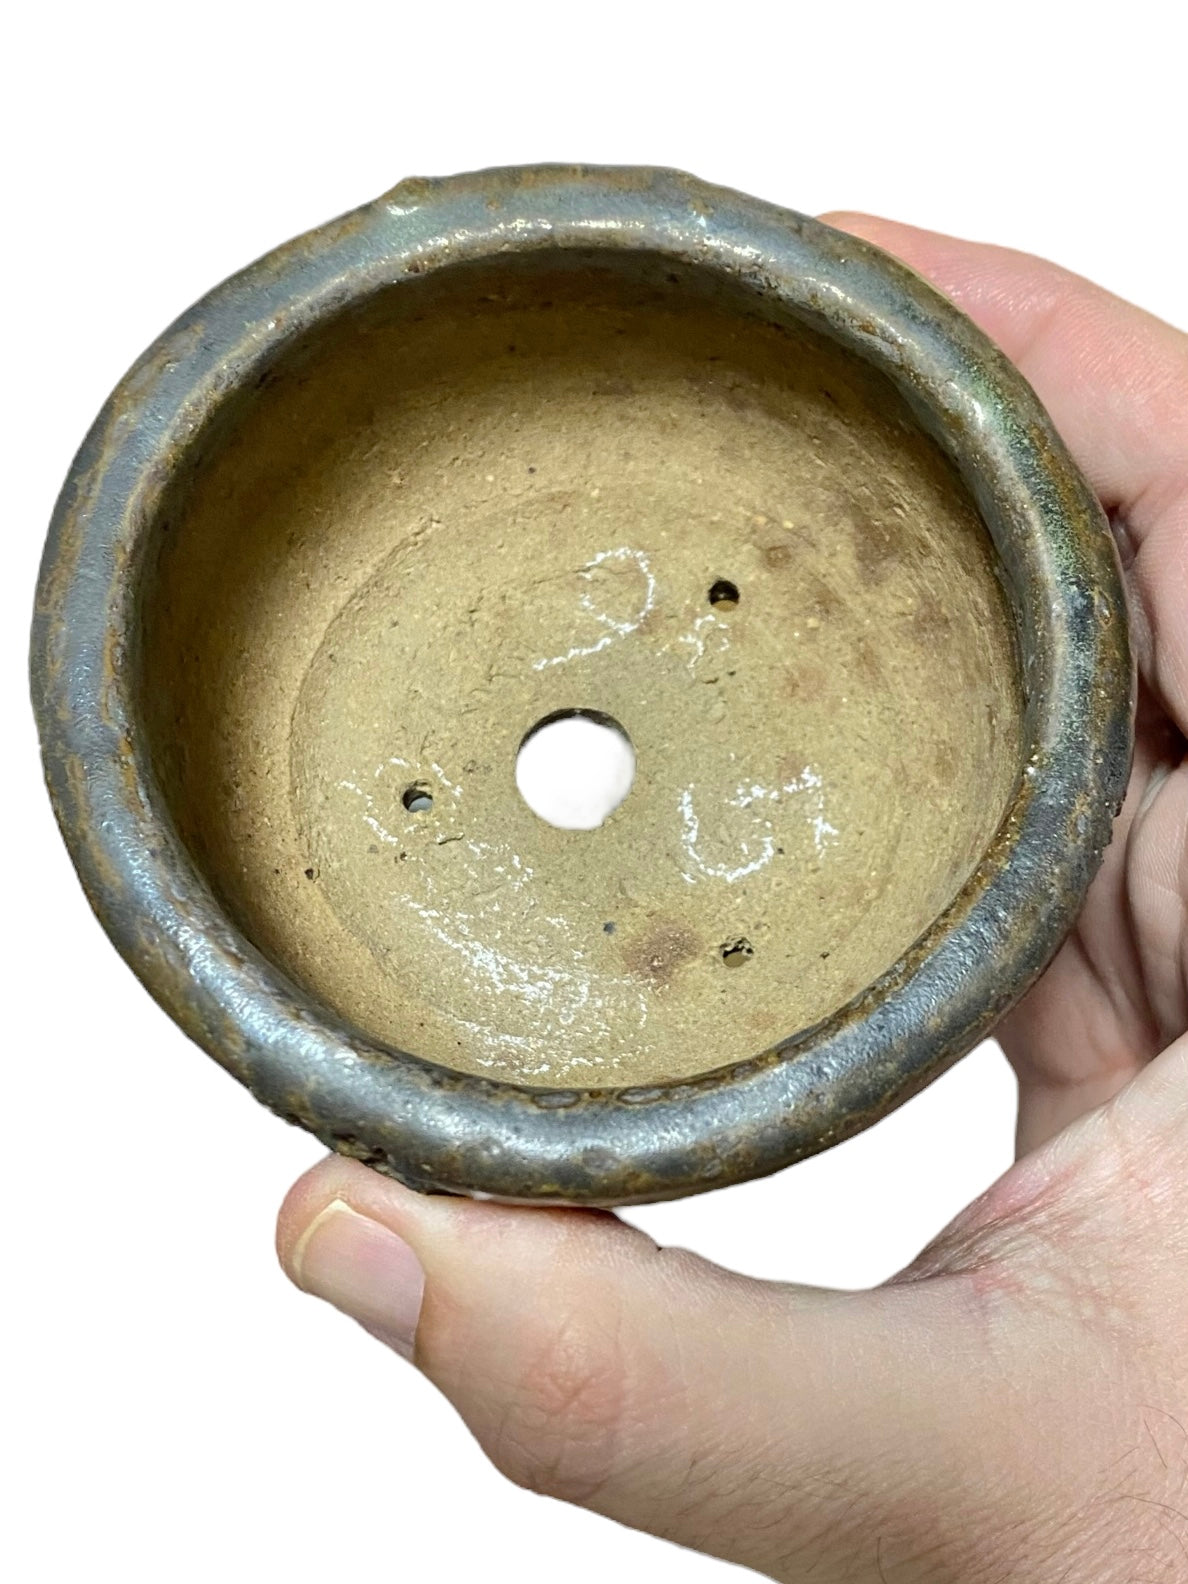 Shuho - Worm-eaten Bowl Style Bonsai or Accent Pot